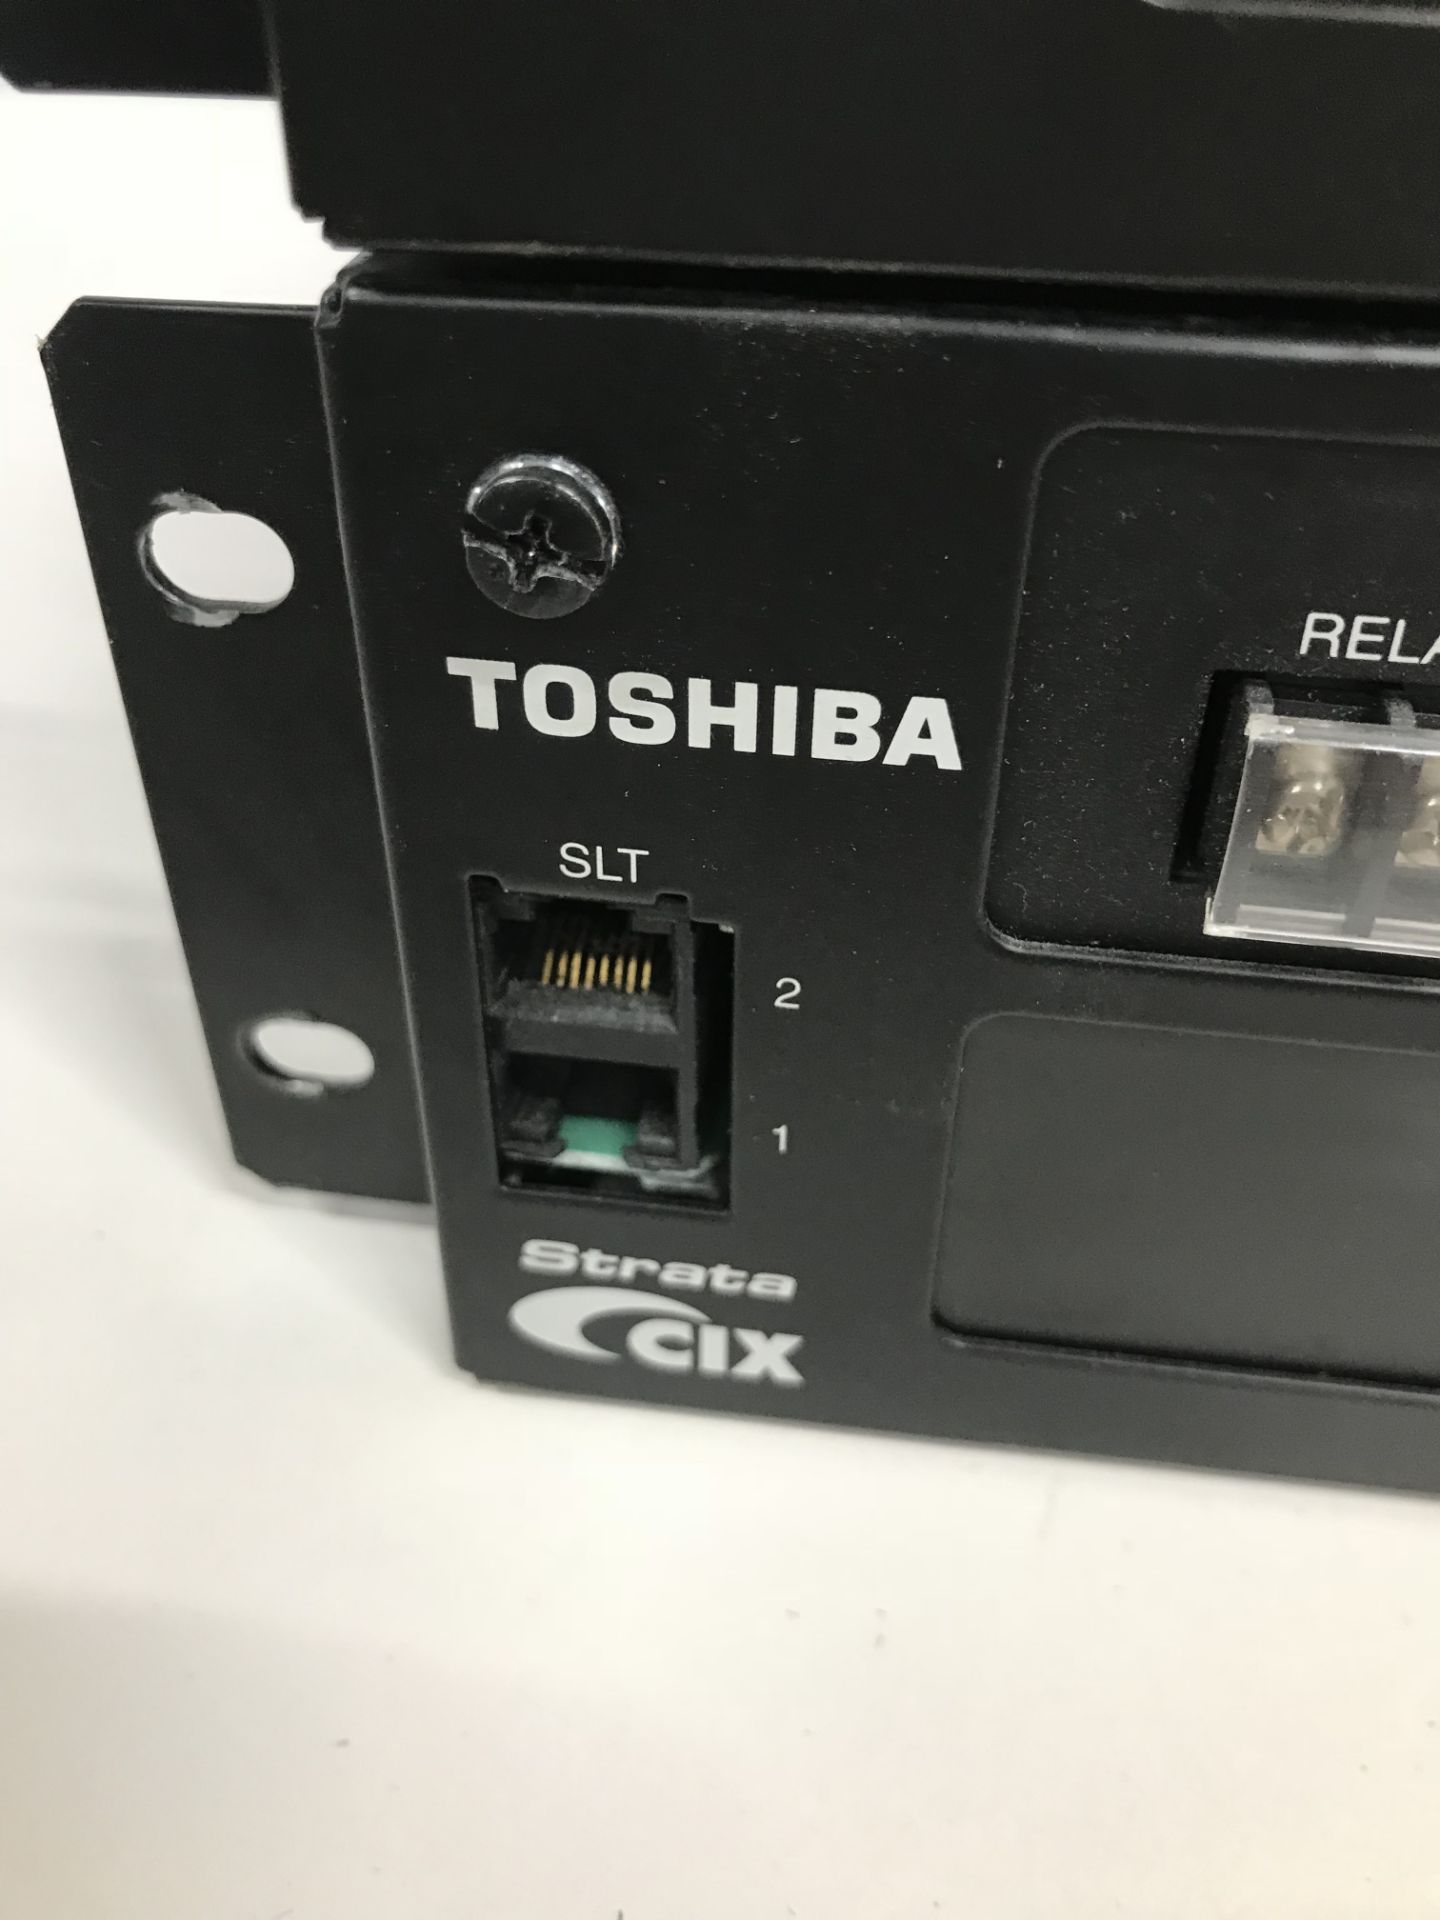 Toshiba SLT 16 Port Cat 5 Switch - Image 2 of 3